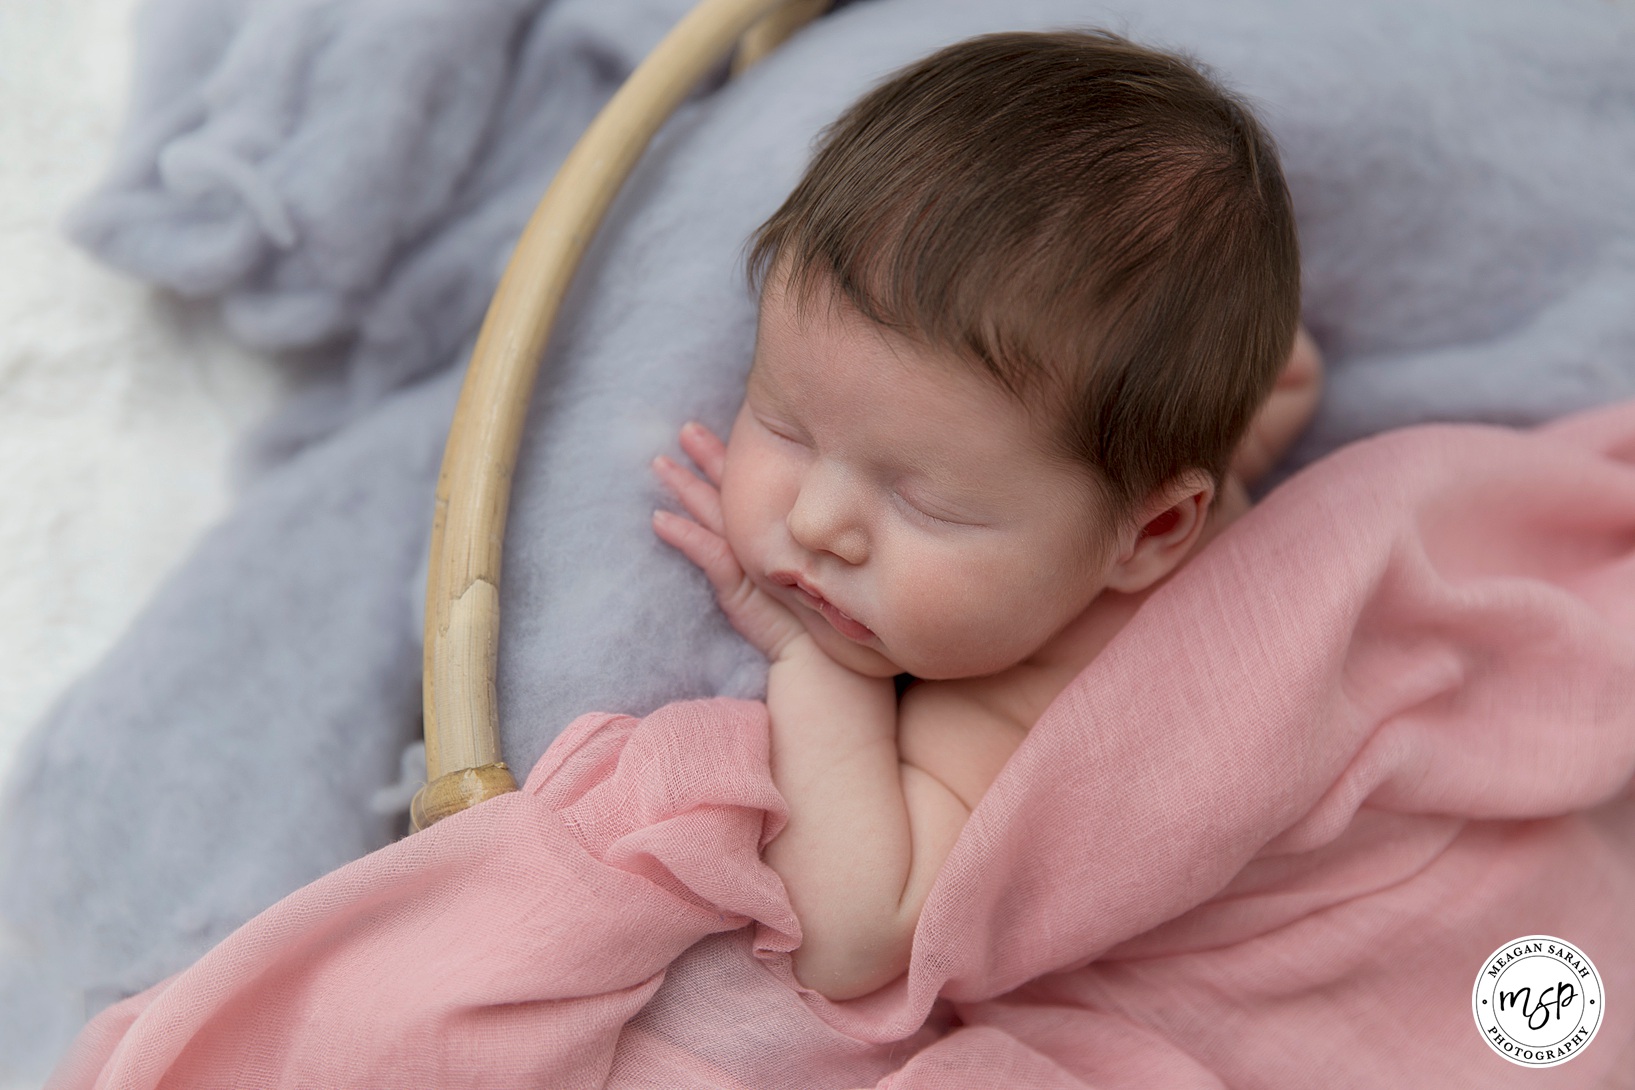 Newborn Photography of Little Girl Nia, Leeds.